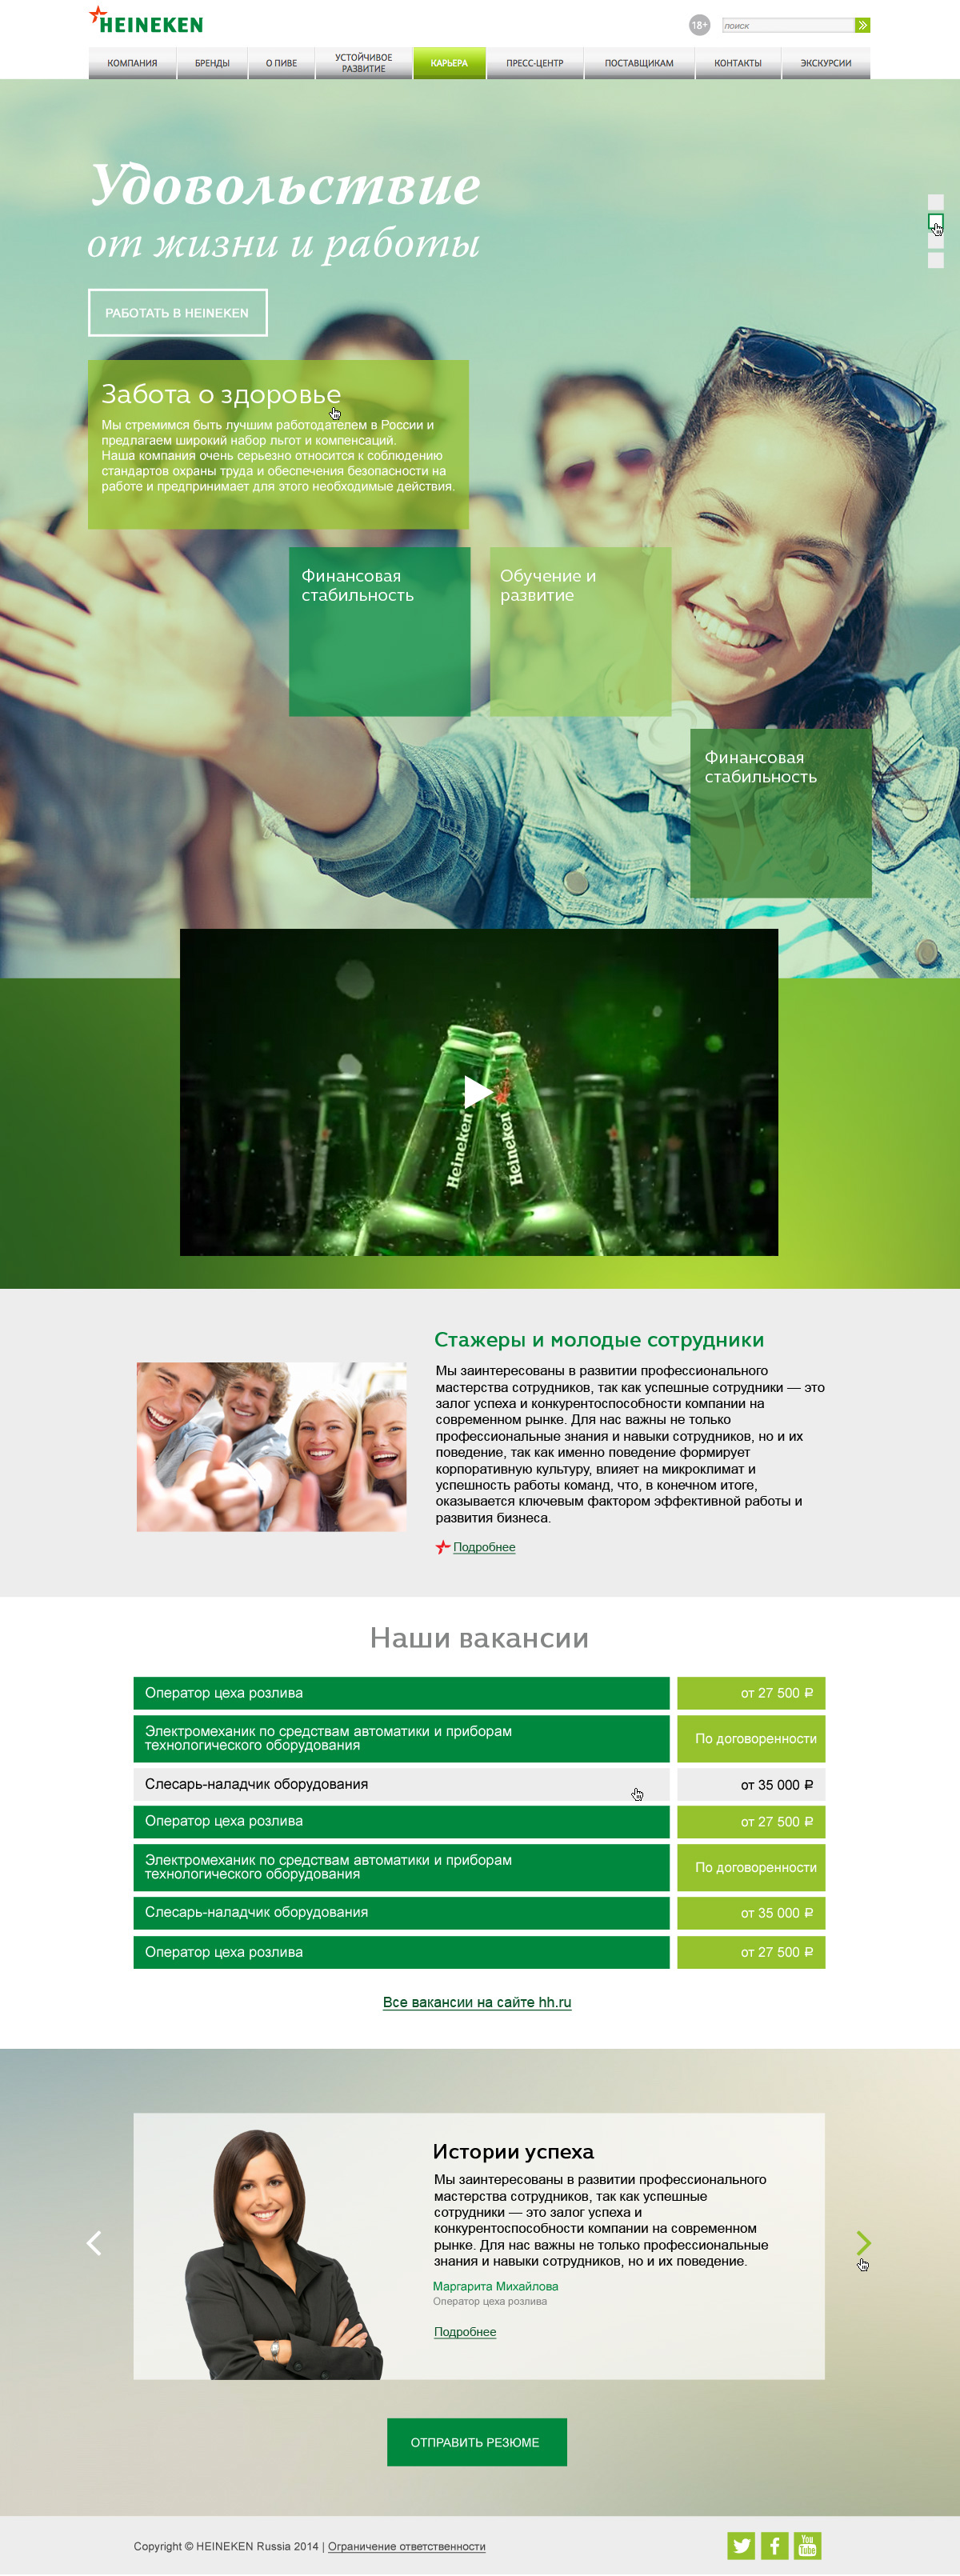 career landing promo green HR design Web